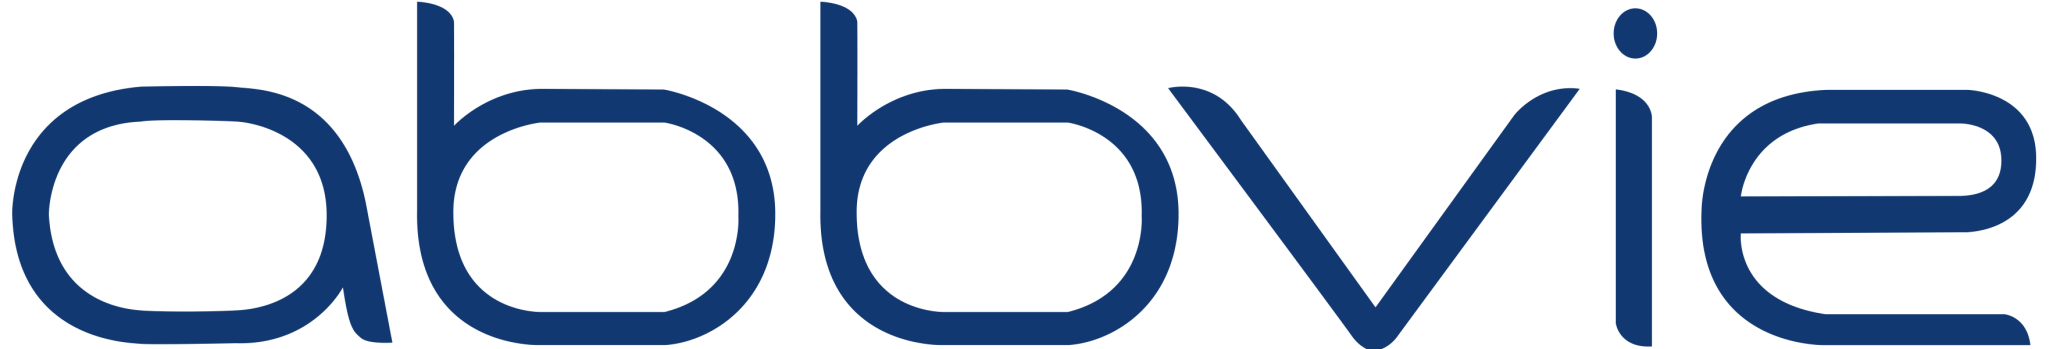 abbvie logo blue